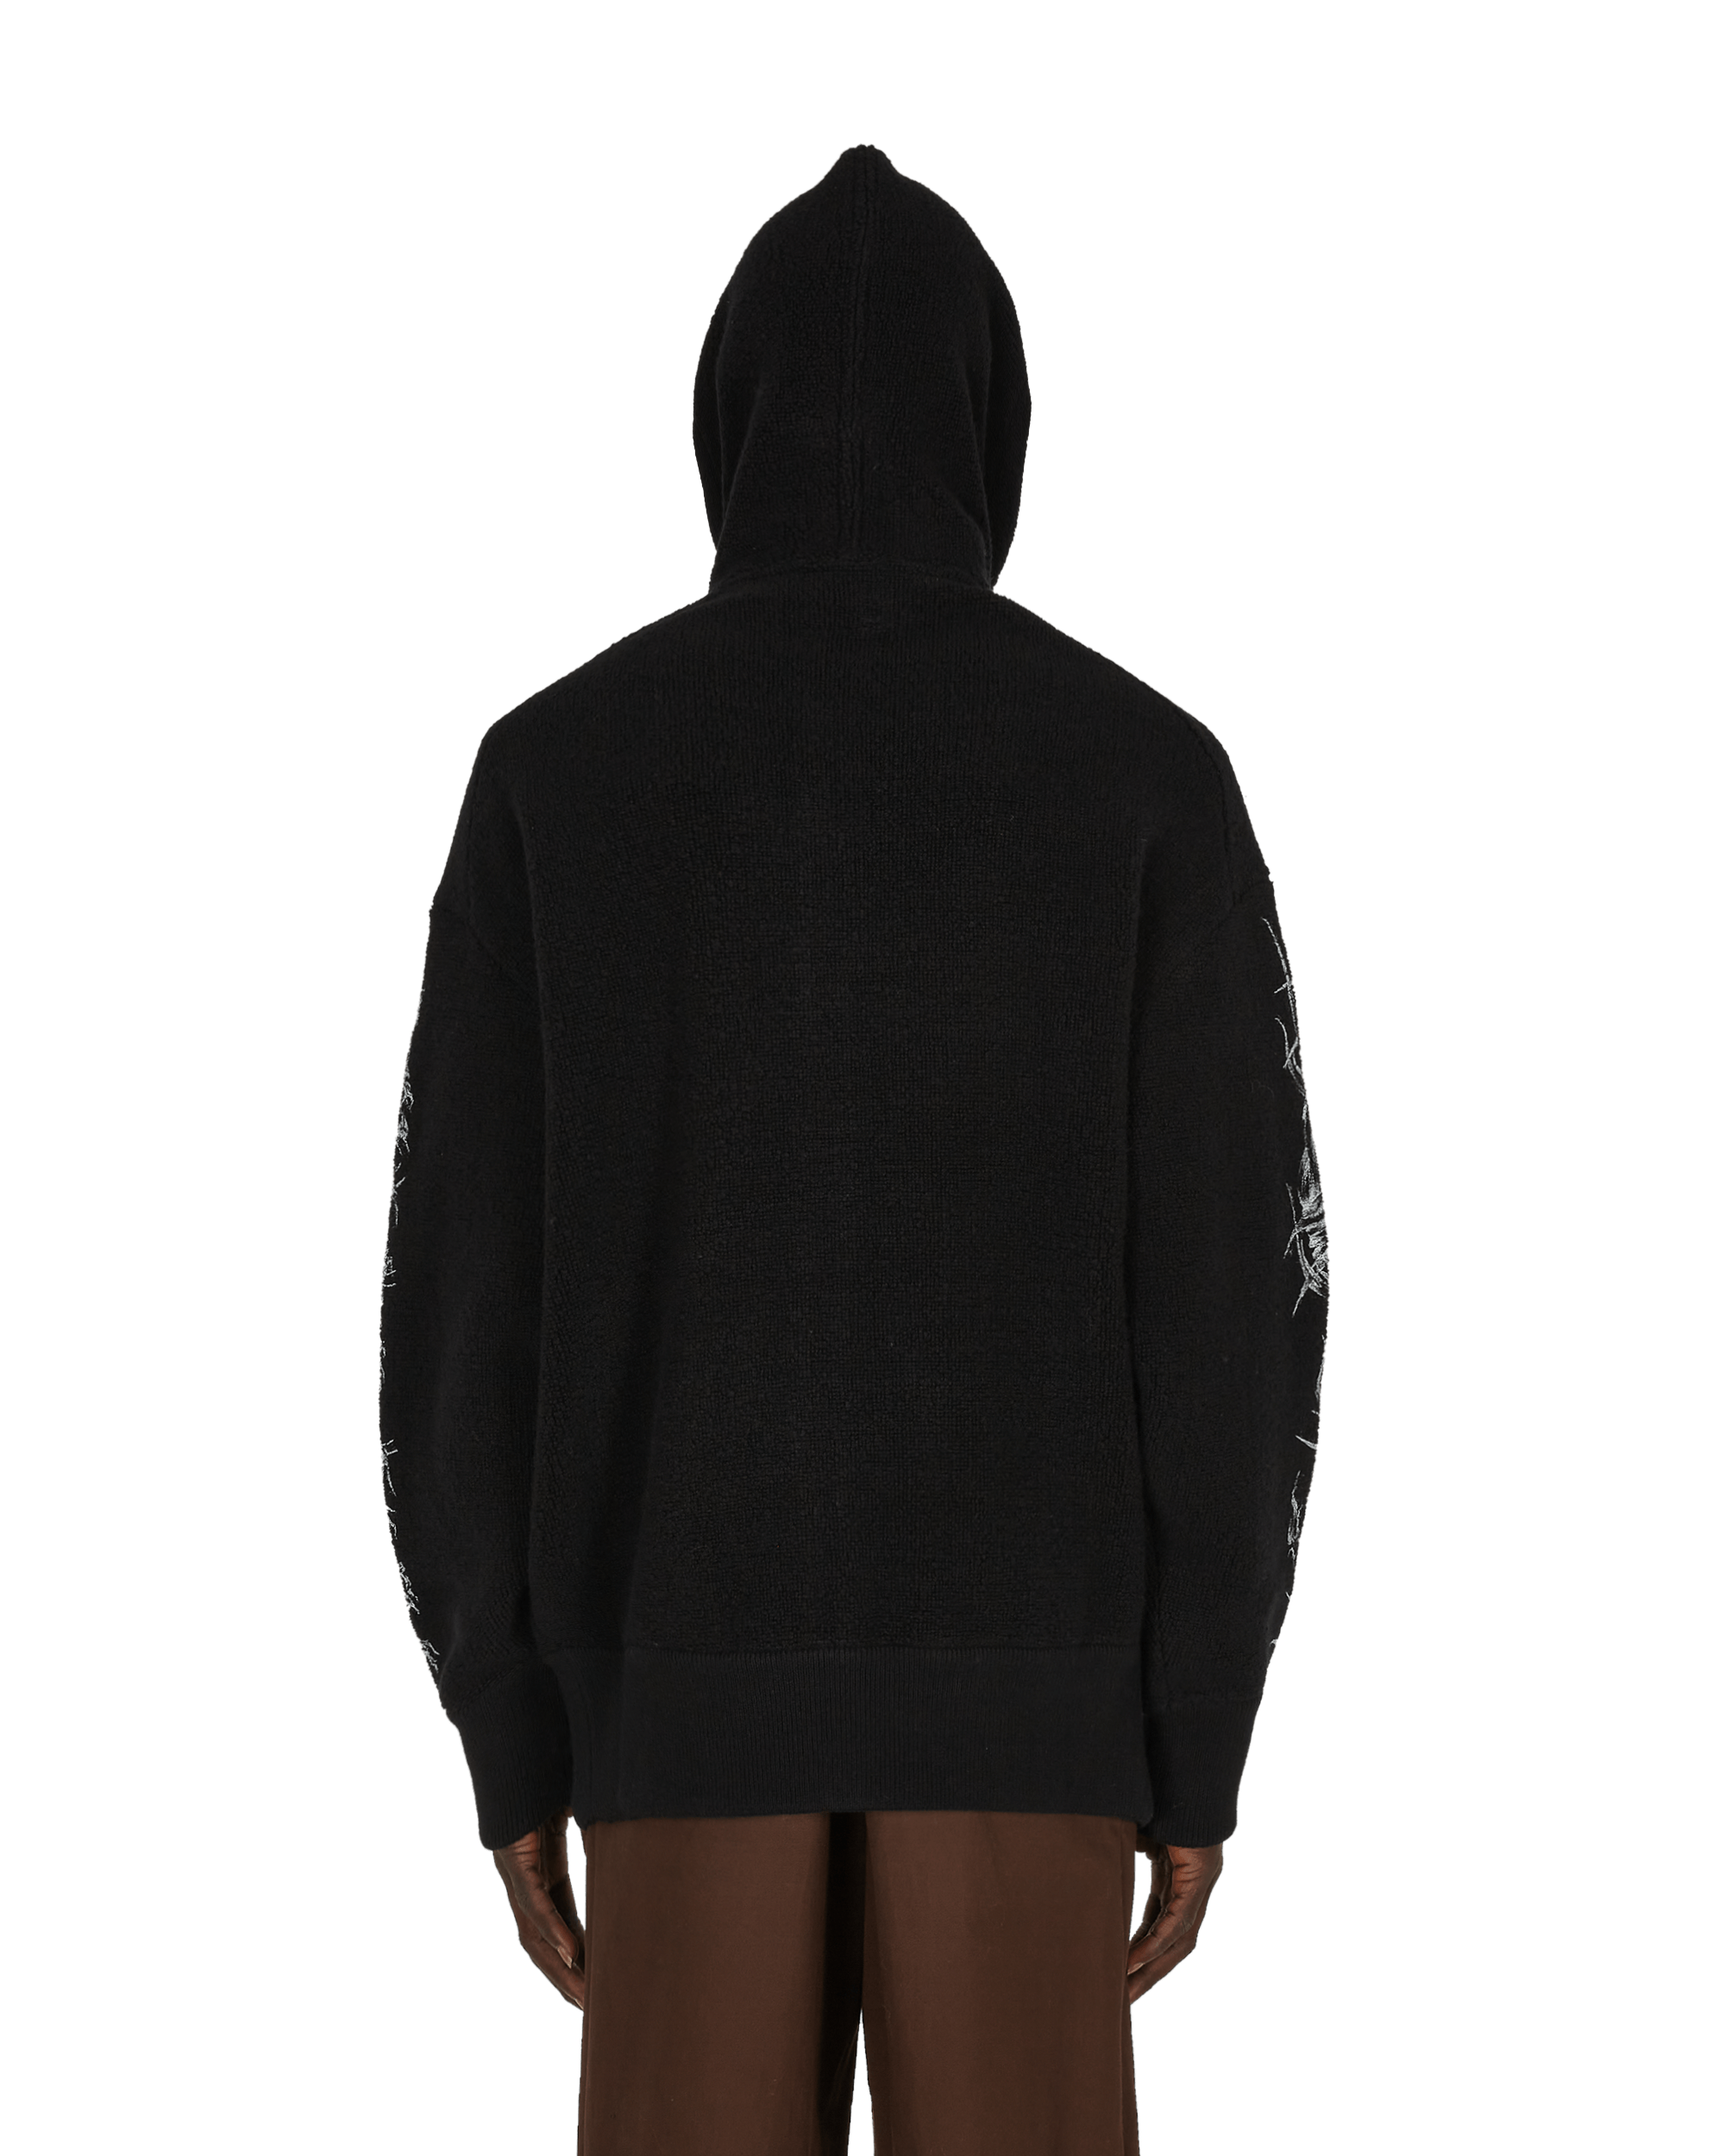 Givenchy Barbedwire Printed Black Sweatshirts Hoodies BM00TM4Y7Y001 001